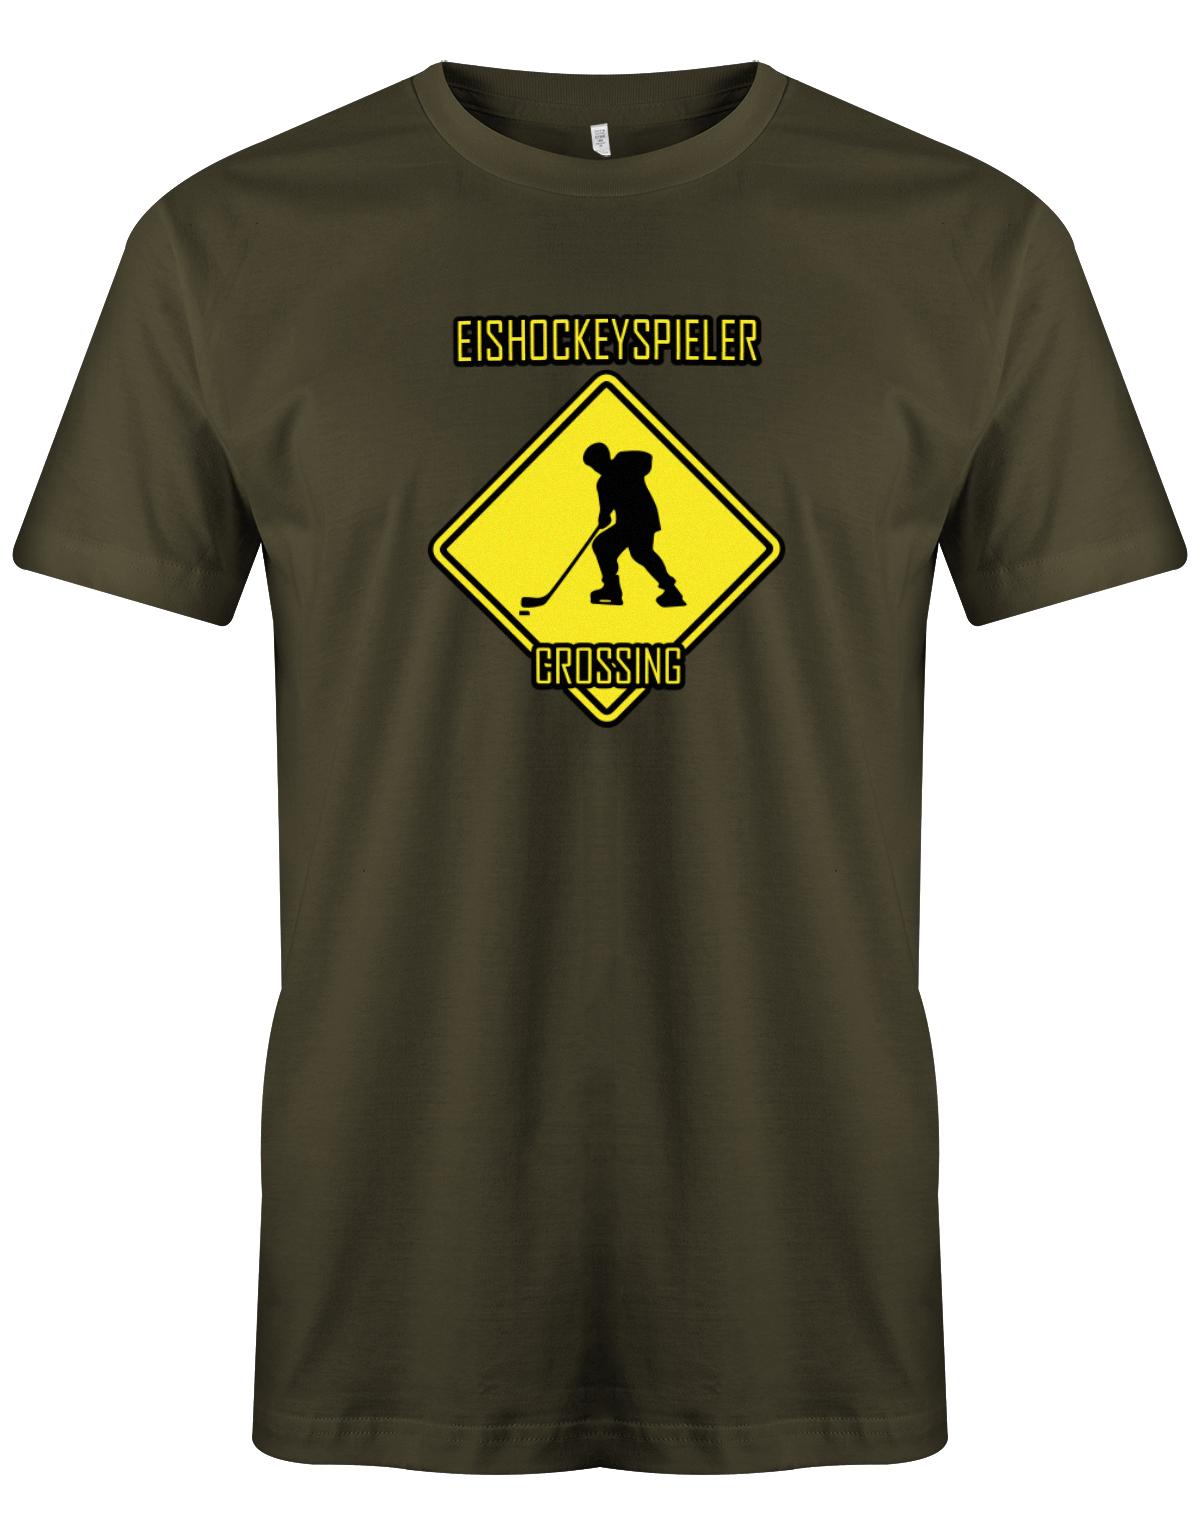 Eishockeyspieler-Crossing-Eishockey-Shirt-Herren-Army